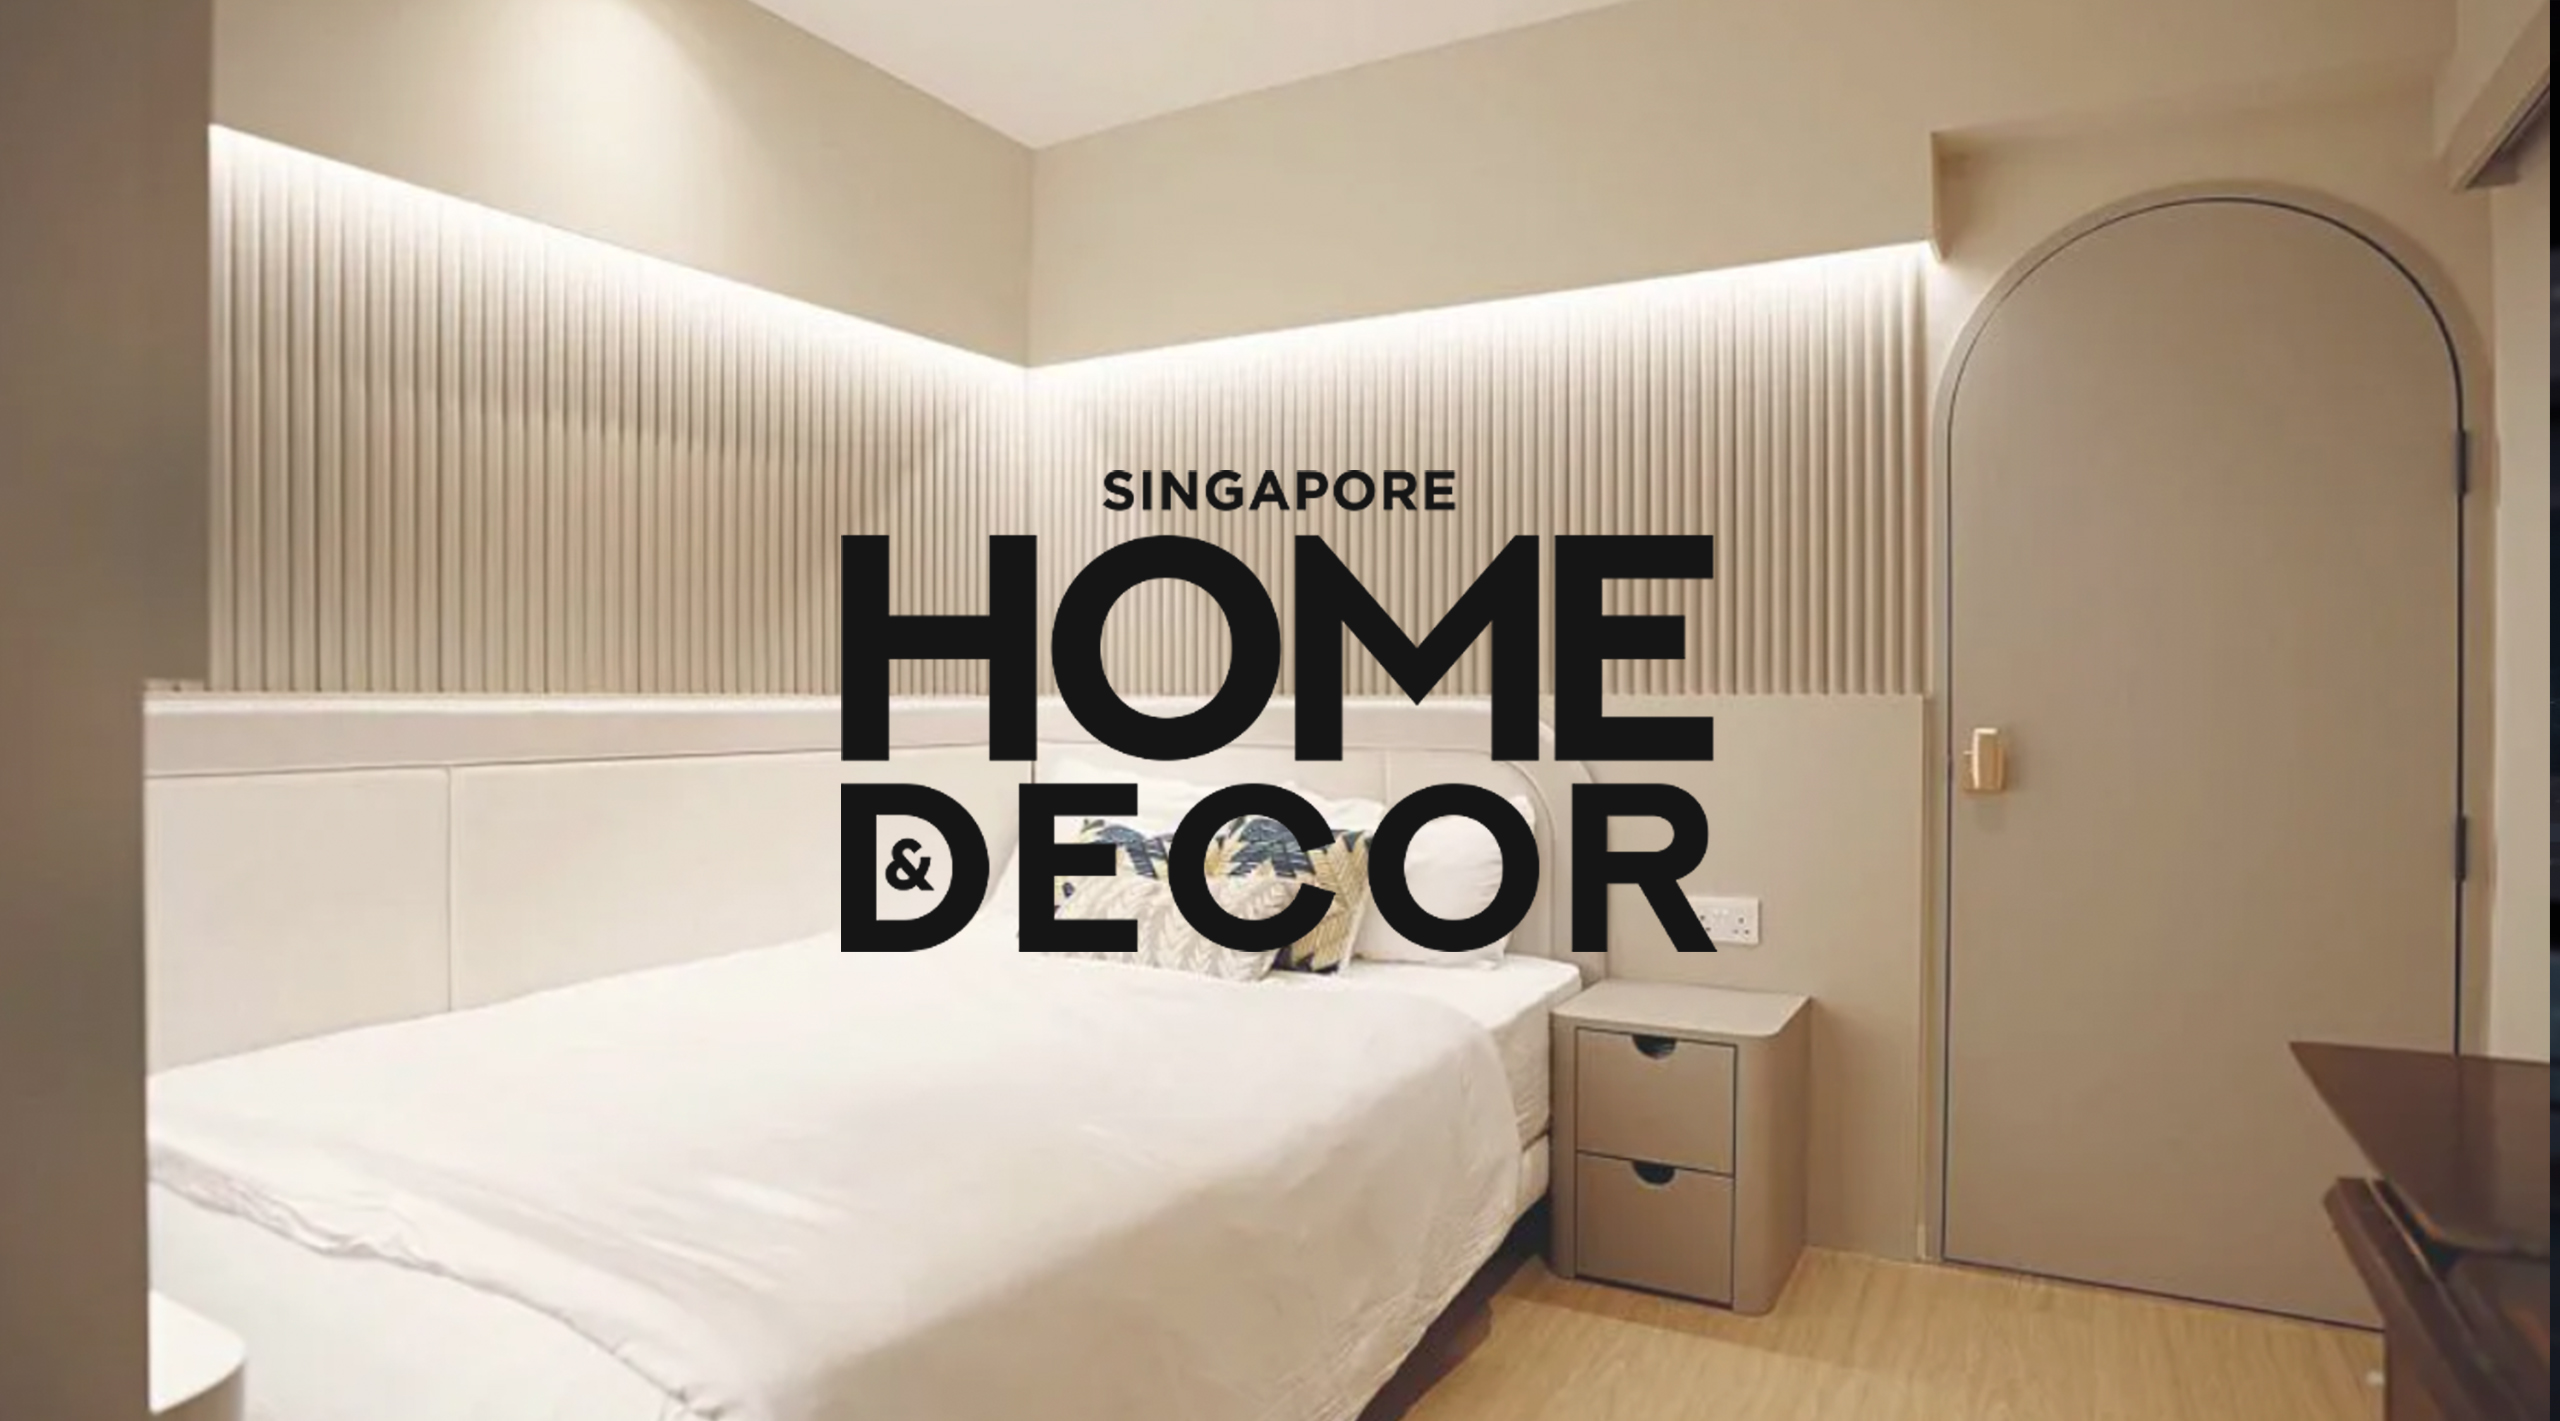 Vwalla Home & Decor Singapore